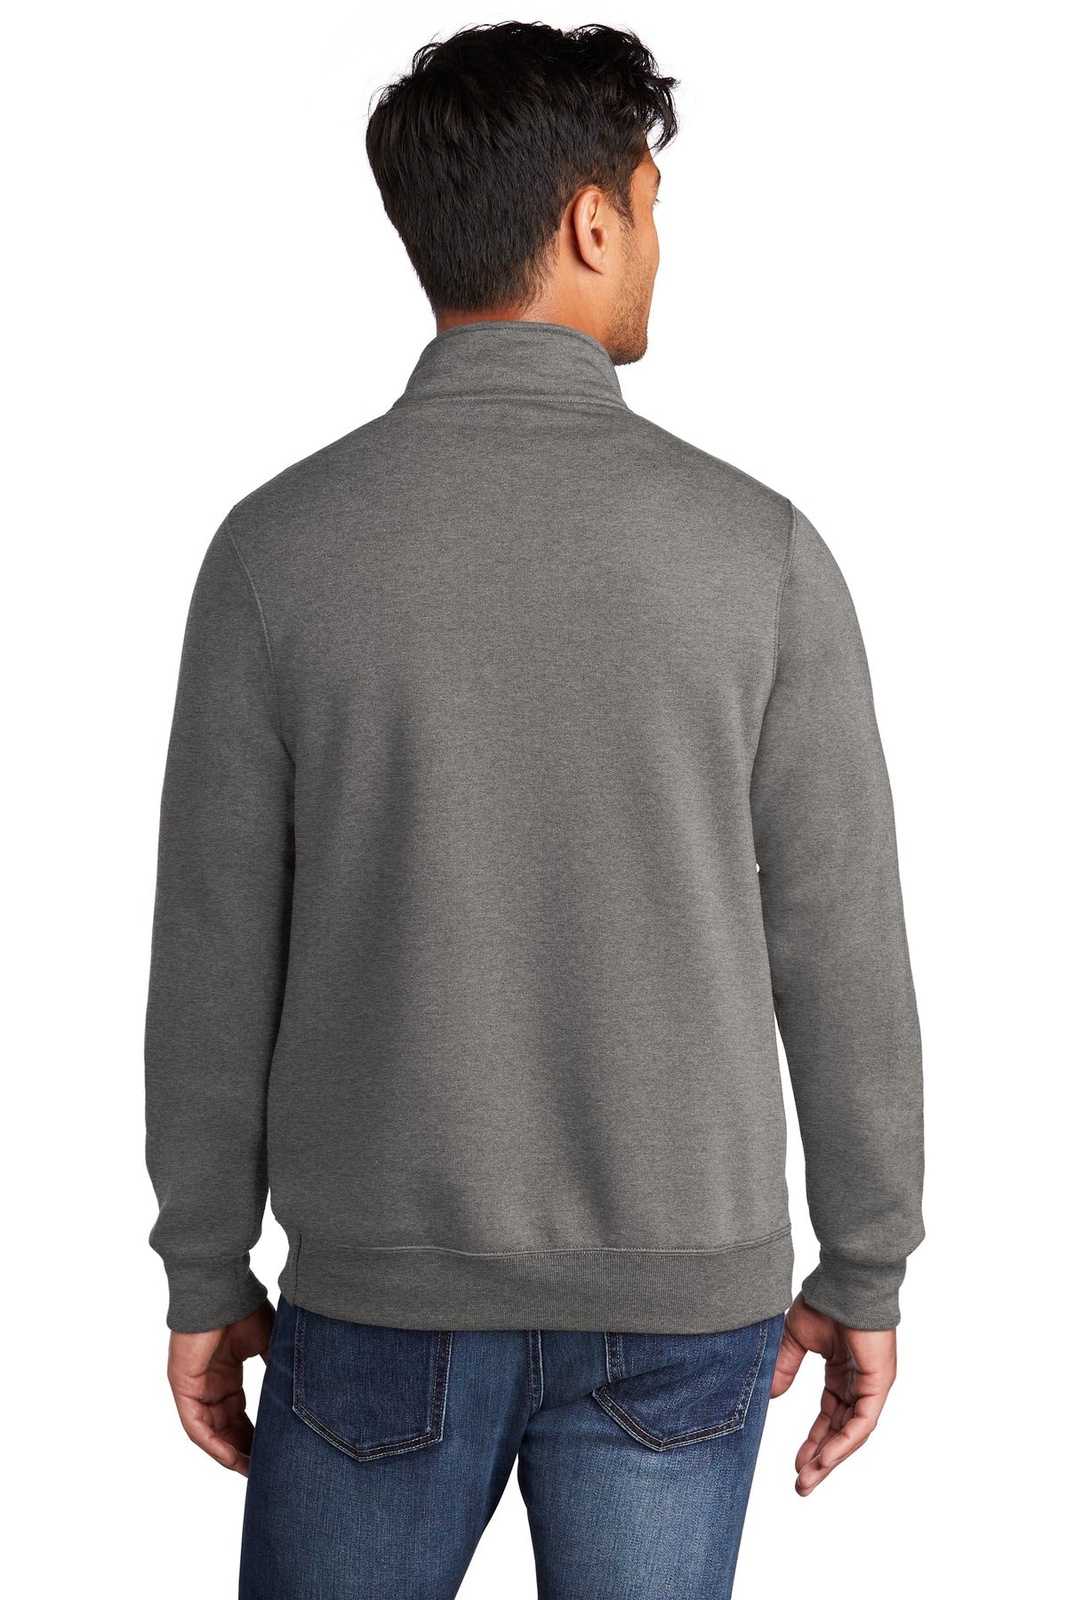 Port & Company PC78Q Core Fleece 1/4-Zip Pullover Sweatshirt - Graphite Heather - HIT a Double - 1